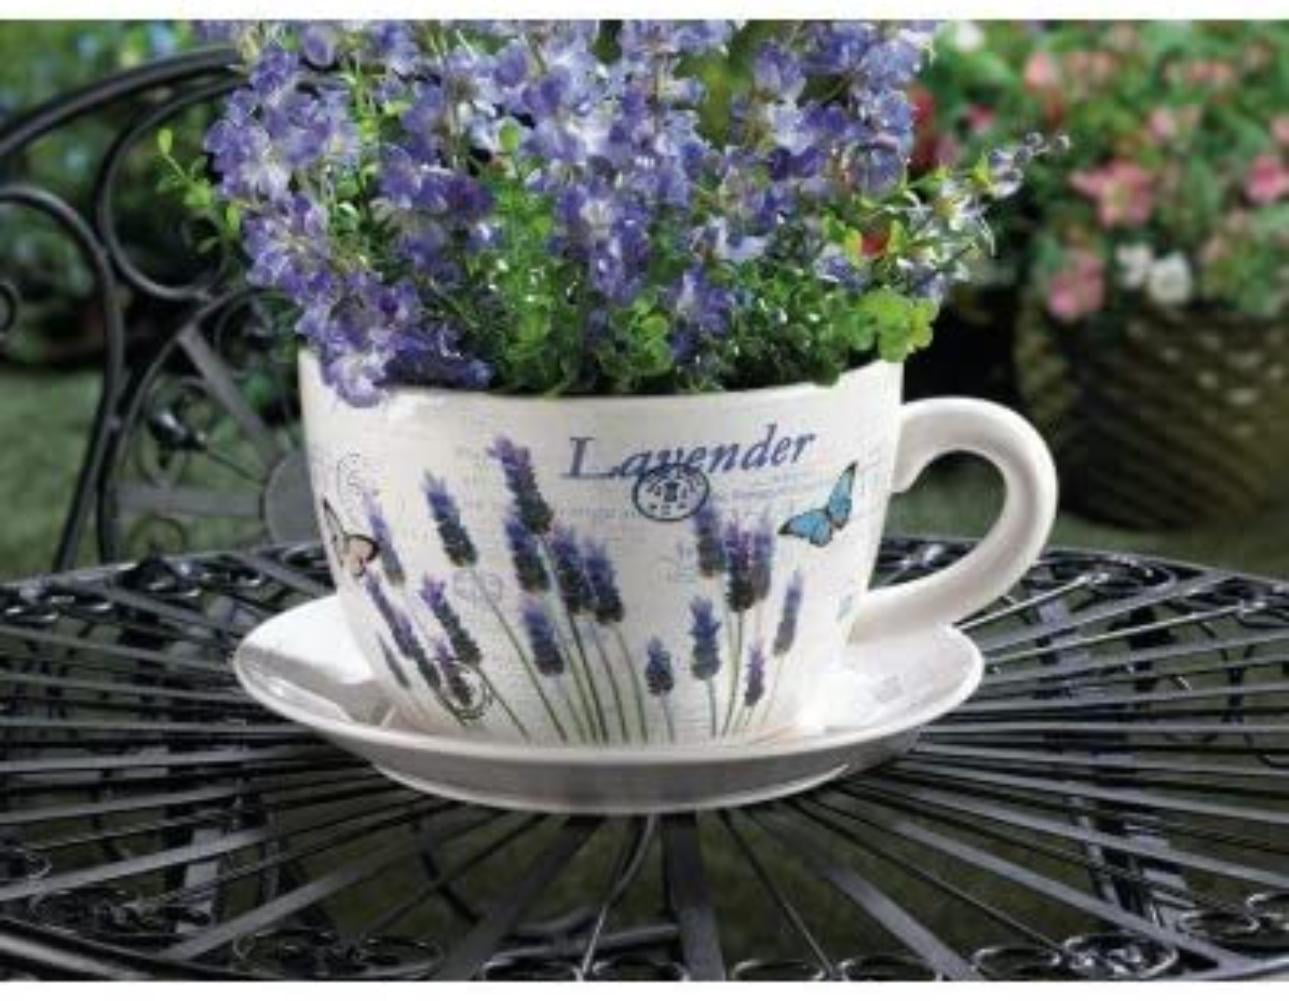 Lavender & Butterfly Theme Teacup & Saucer Planter Drain Hole Bottom of Teacup 